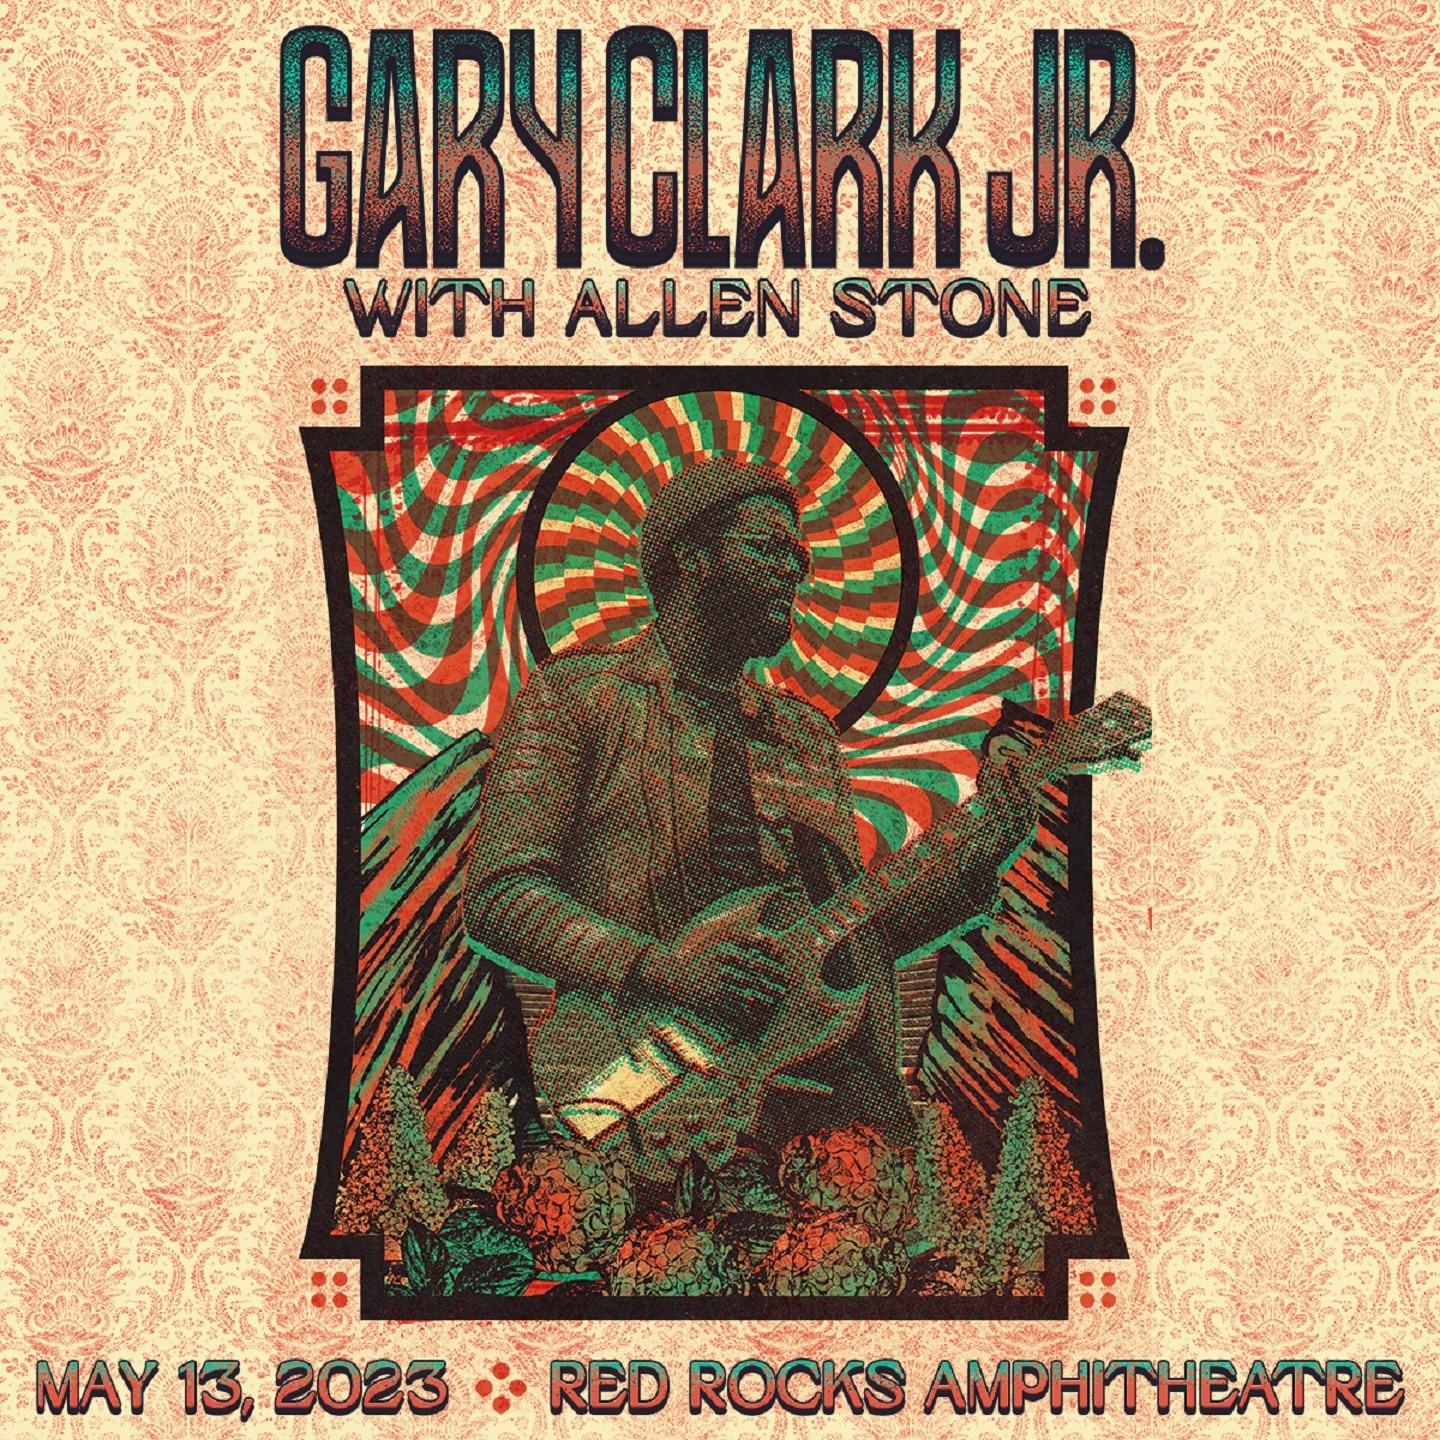 Gary Clark Jr. to headline Red Rocks on May 13th